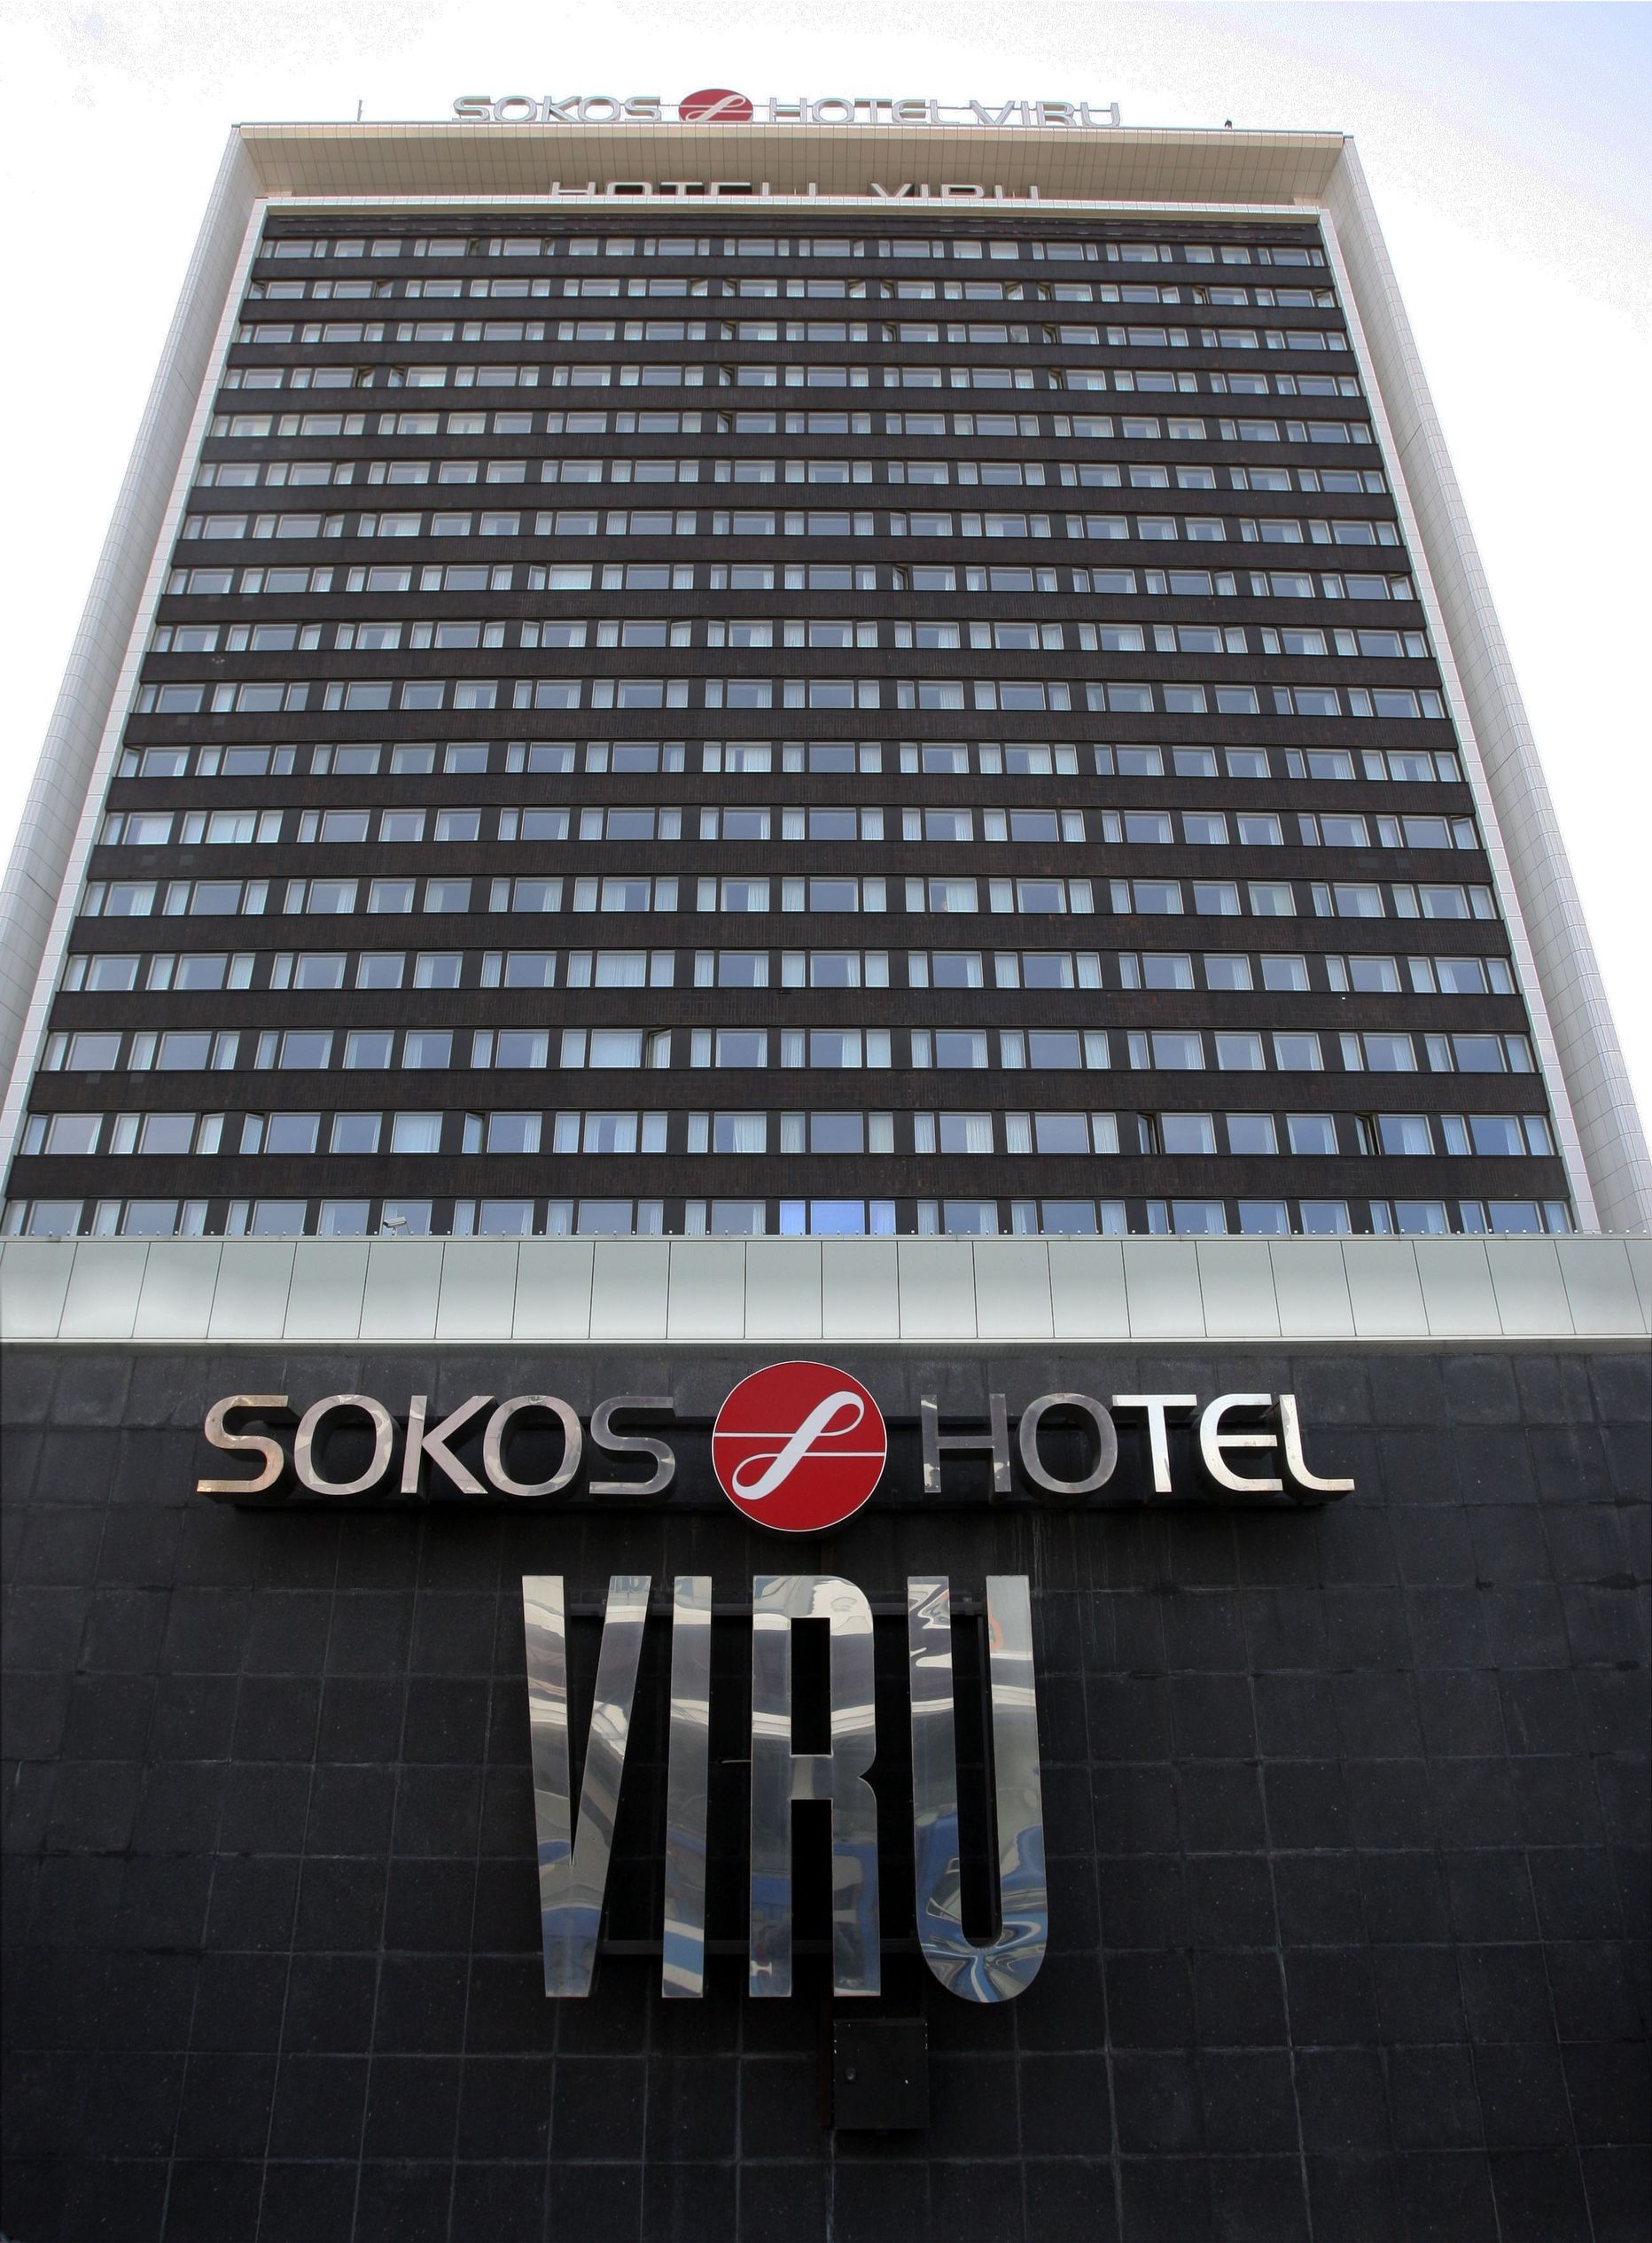 Sokos Hotel Viru.